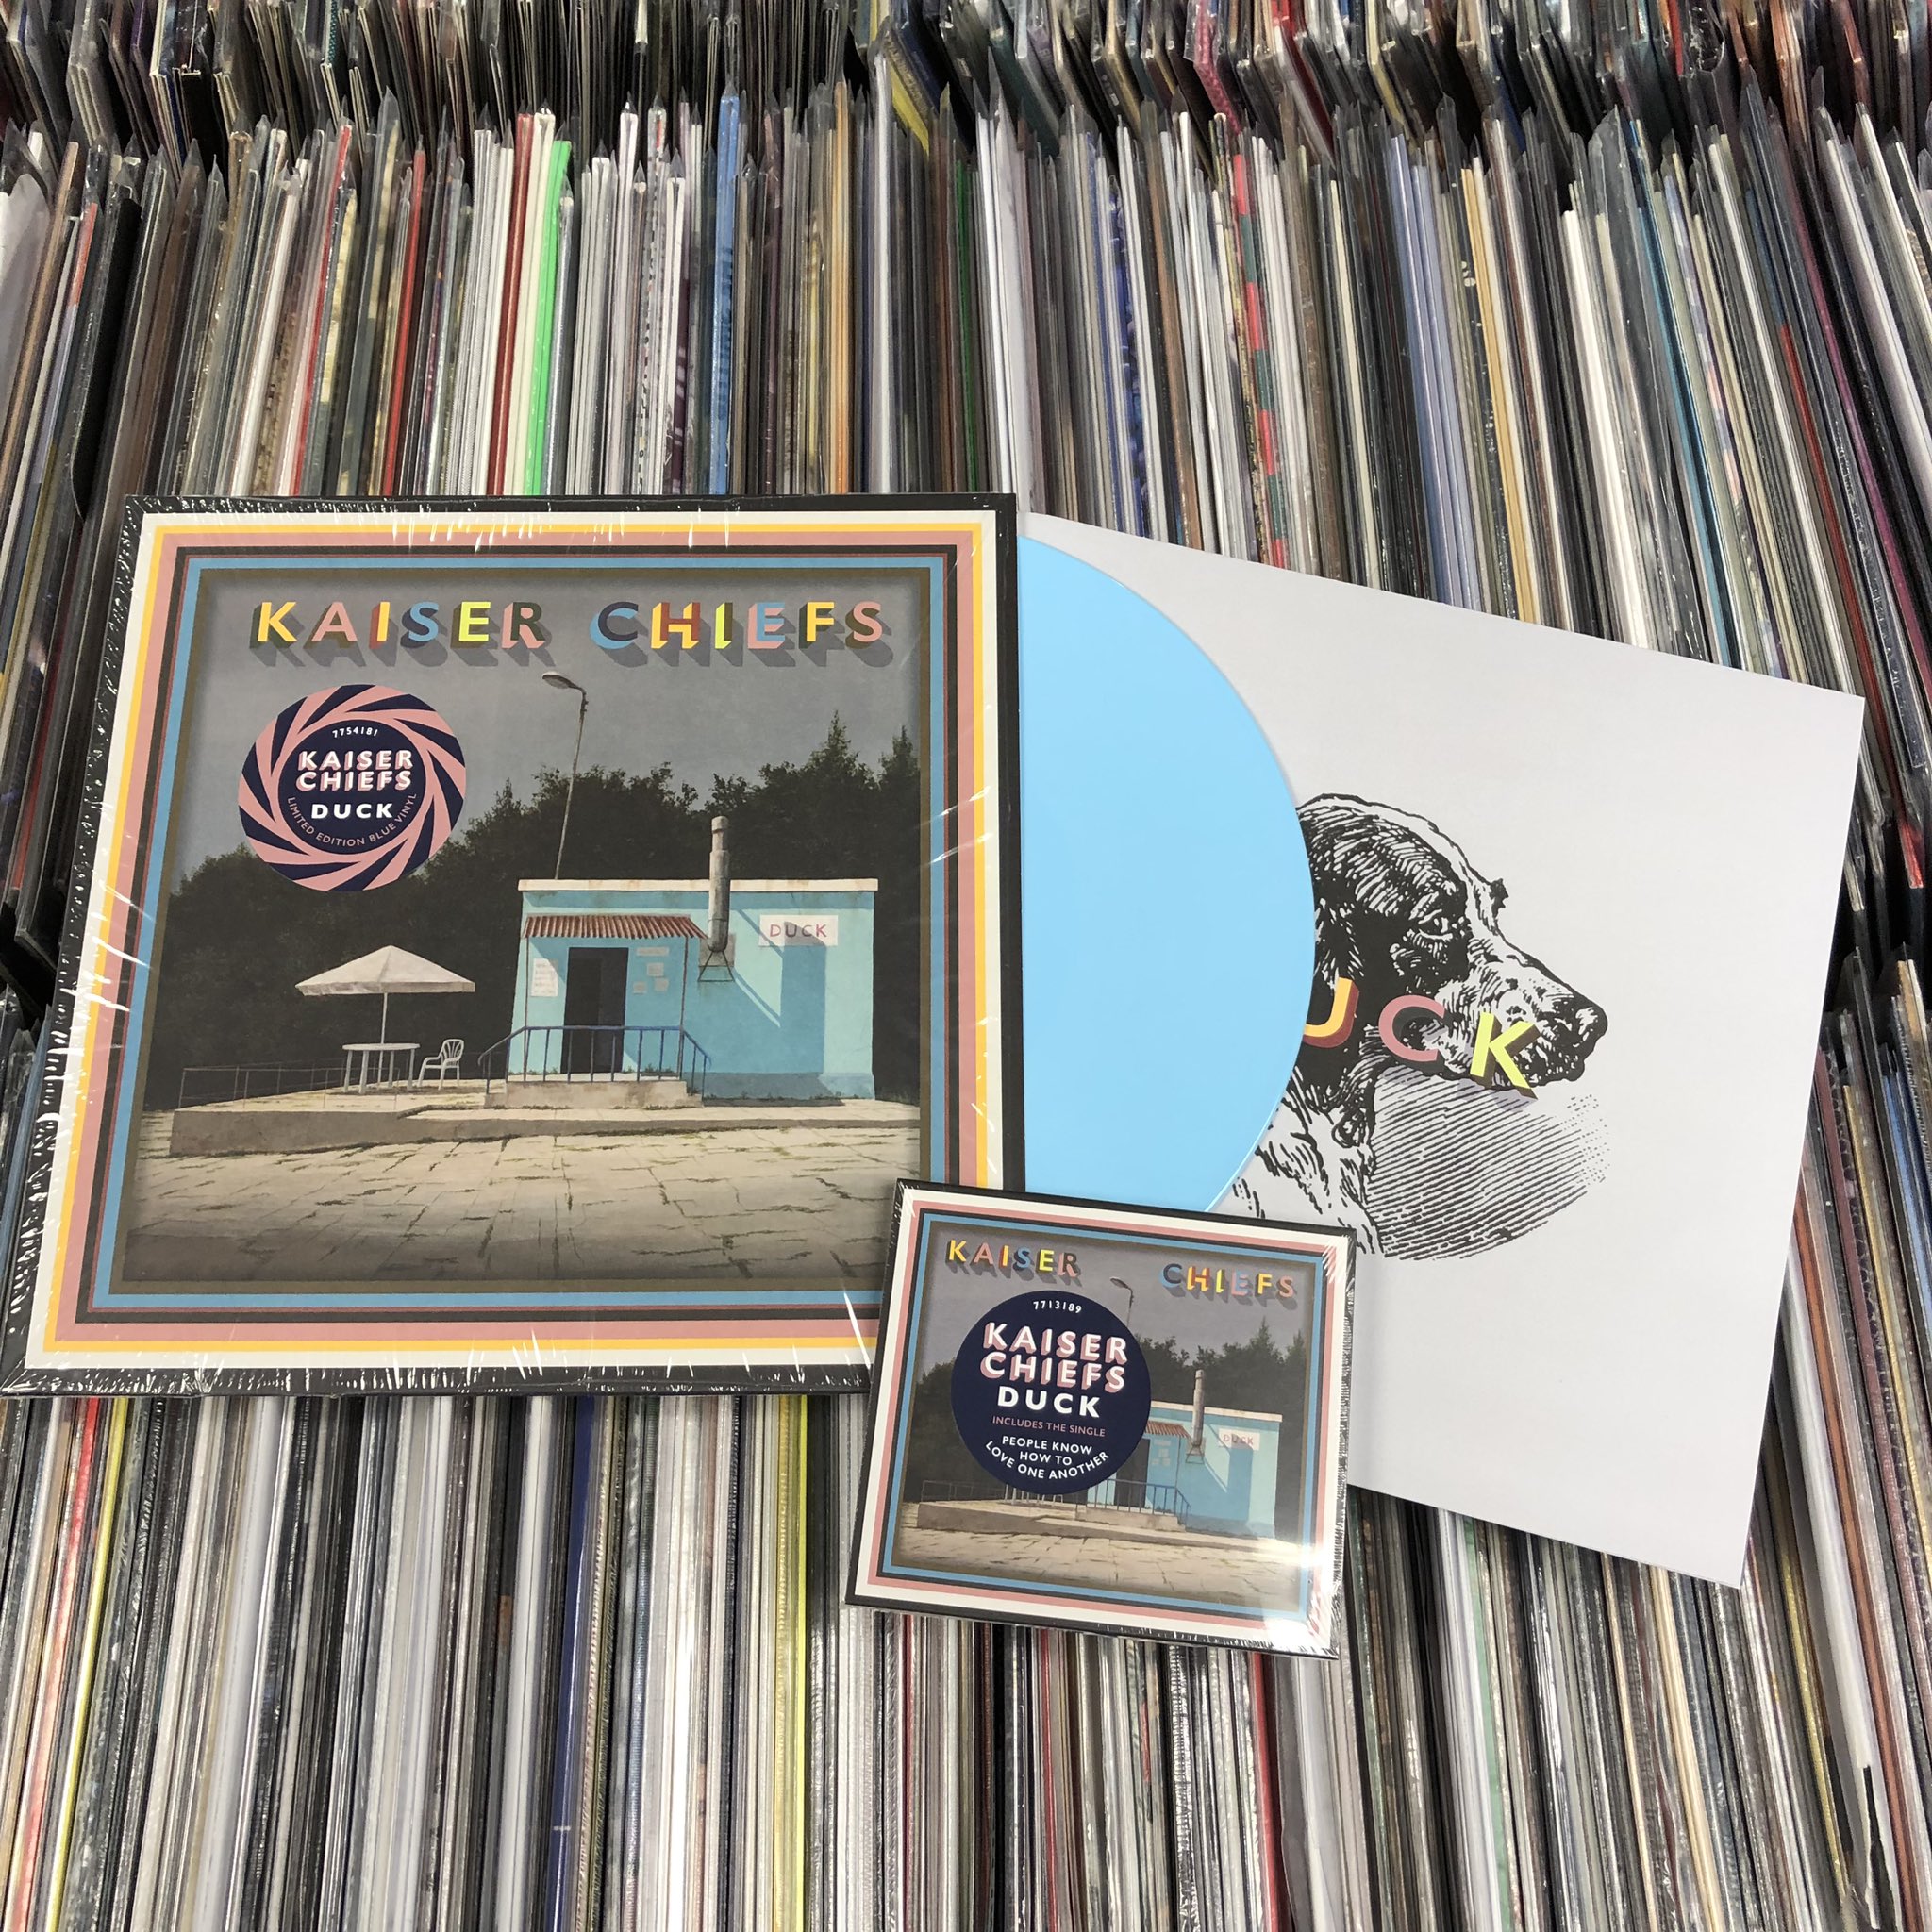 تويتر \ David's Music على تويتر: "TODAY! Kaiser Chiefs - Duck CD / LP *limited edition BLUE 7th album from indie rock “It's undeniably fantastic Chiefs” says frontman